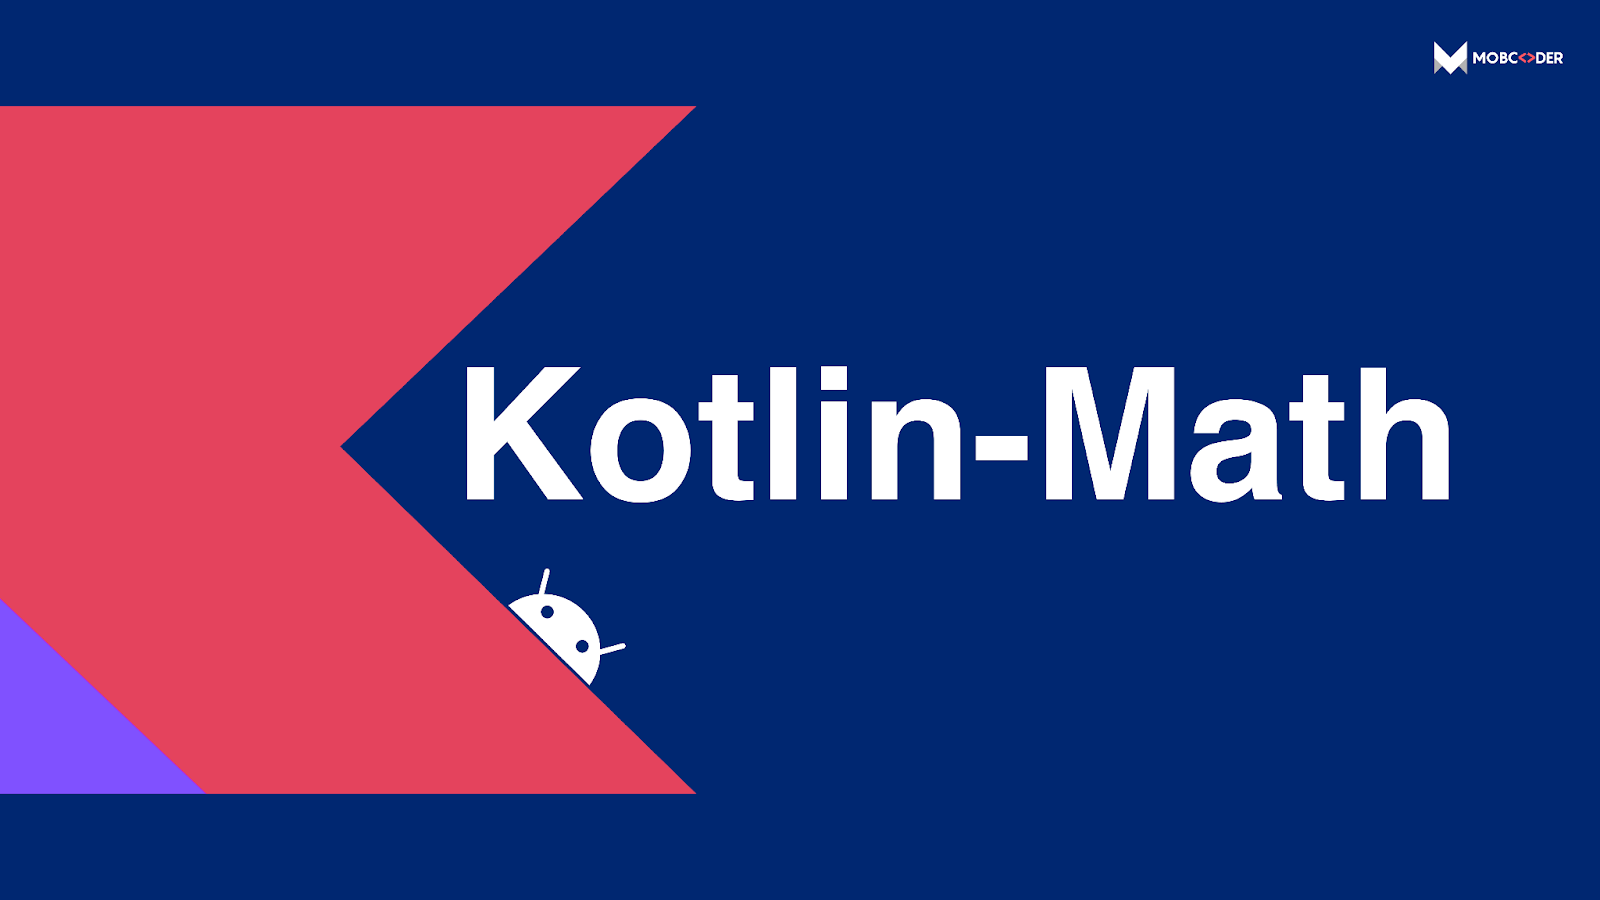 Kotlin-math